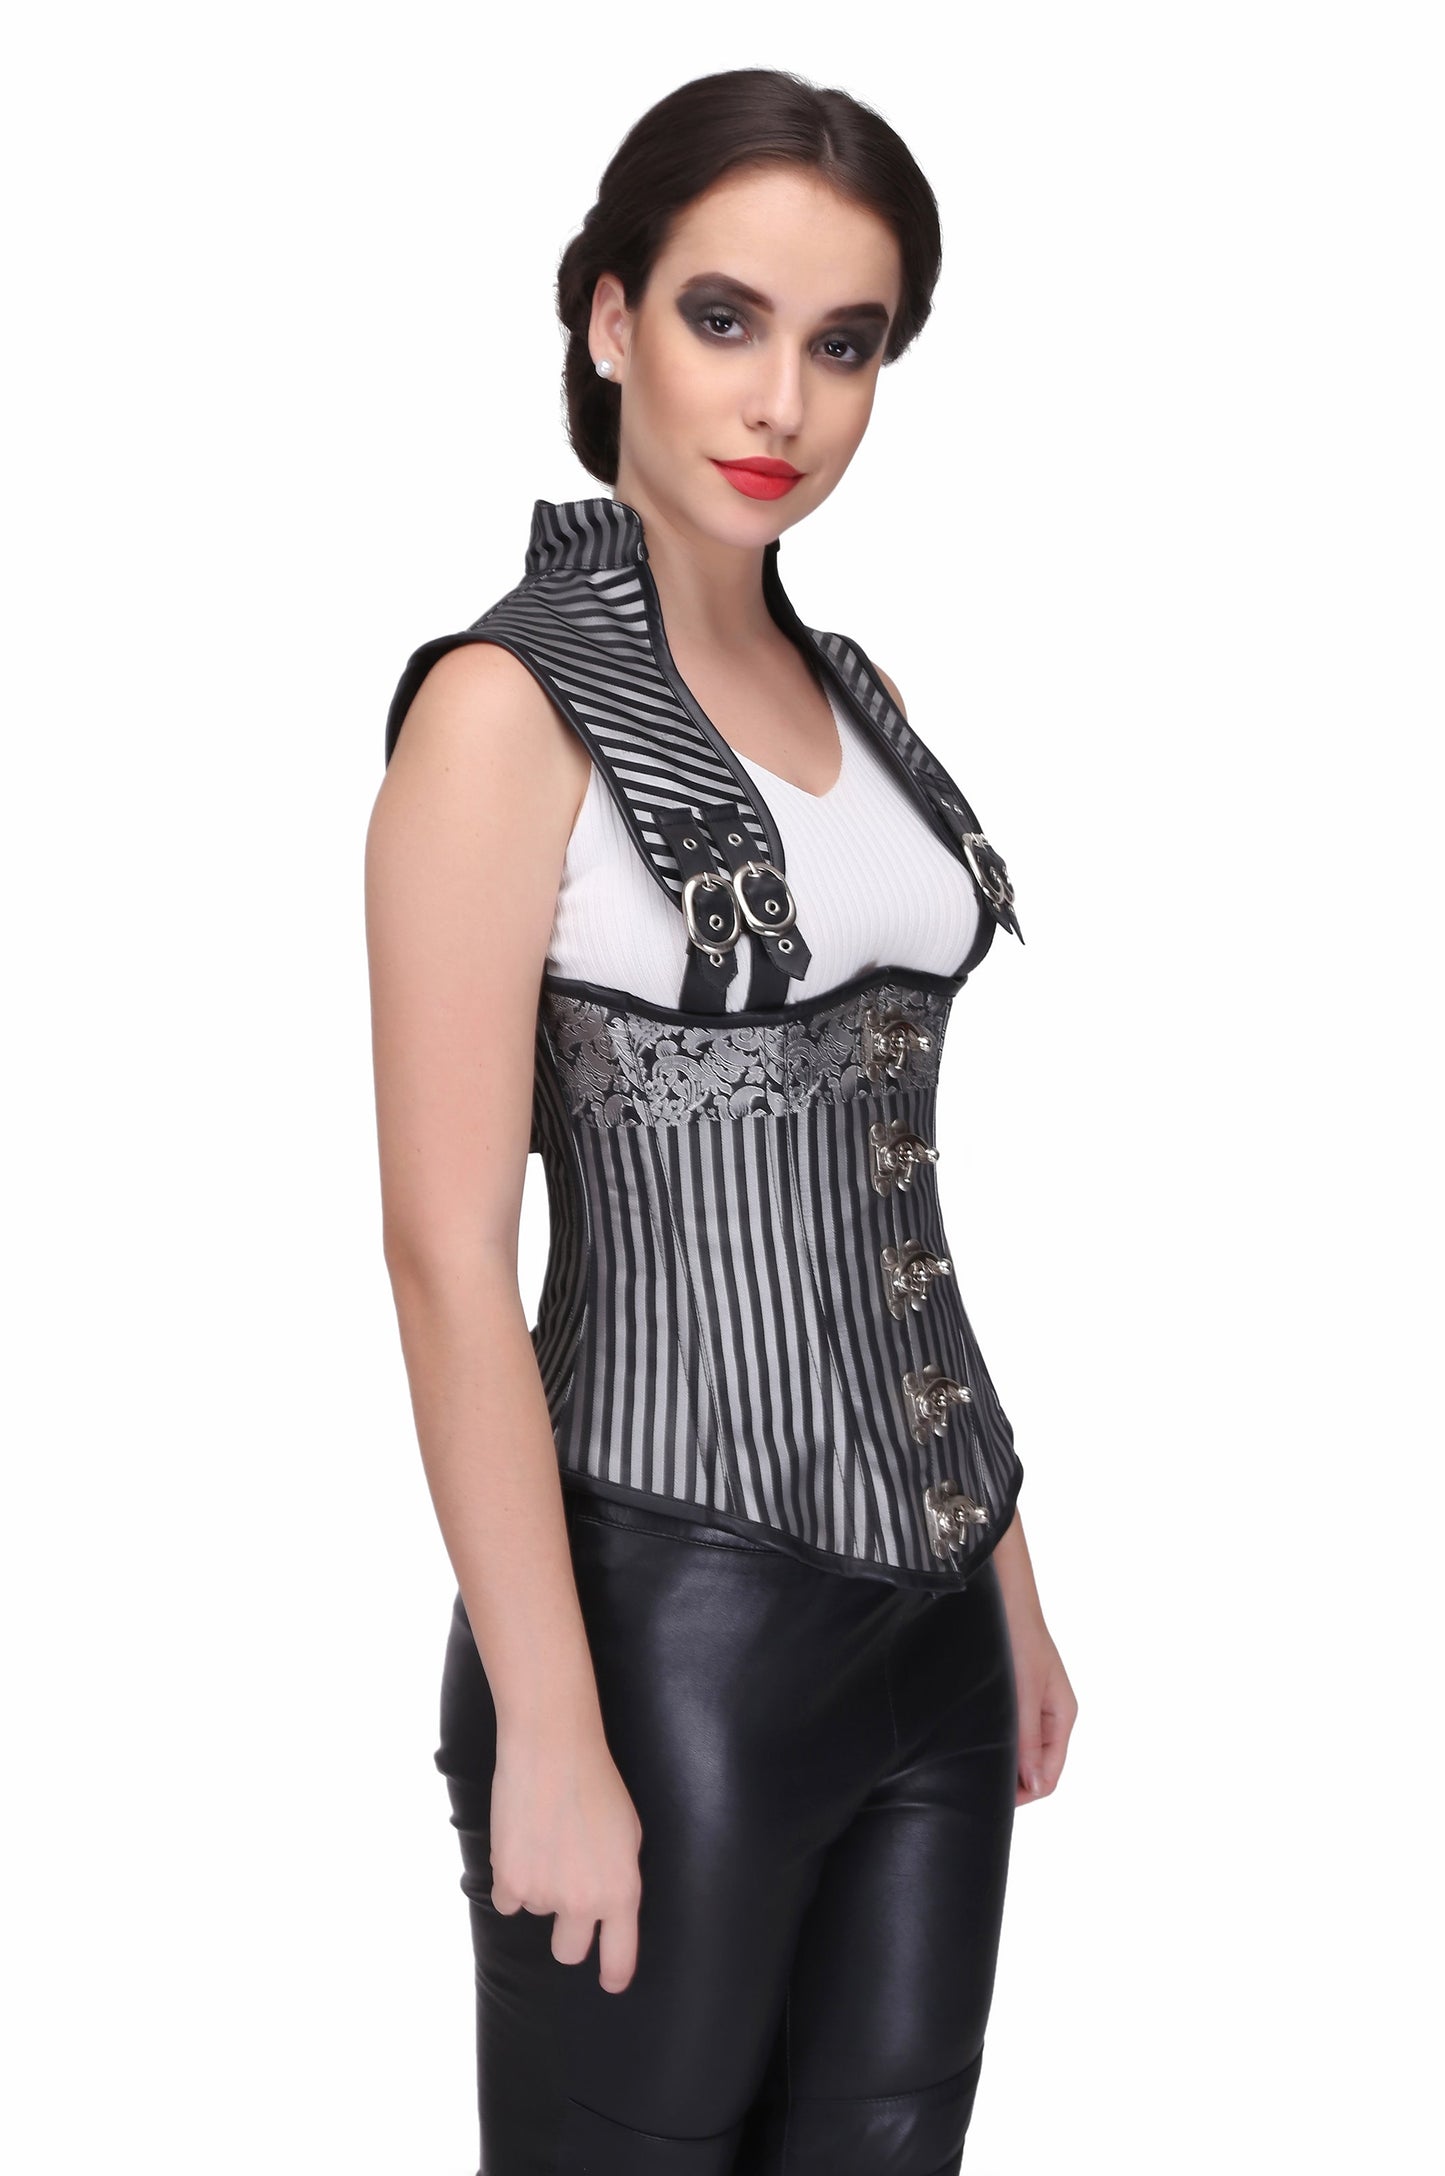 Black/silver brocade underbust corset top - Corset Revolution